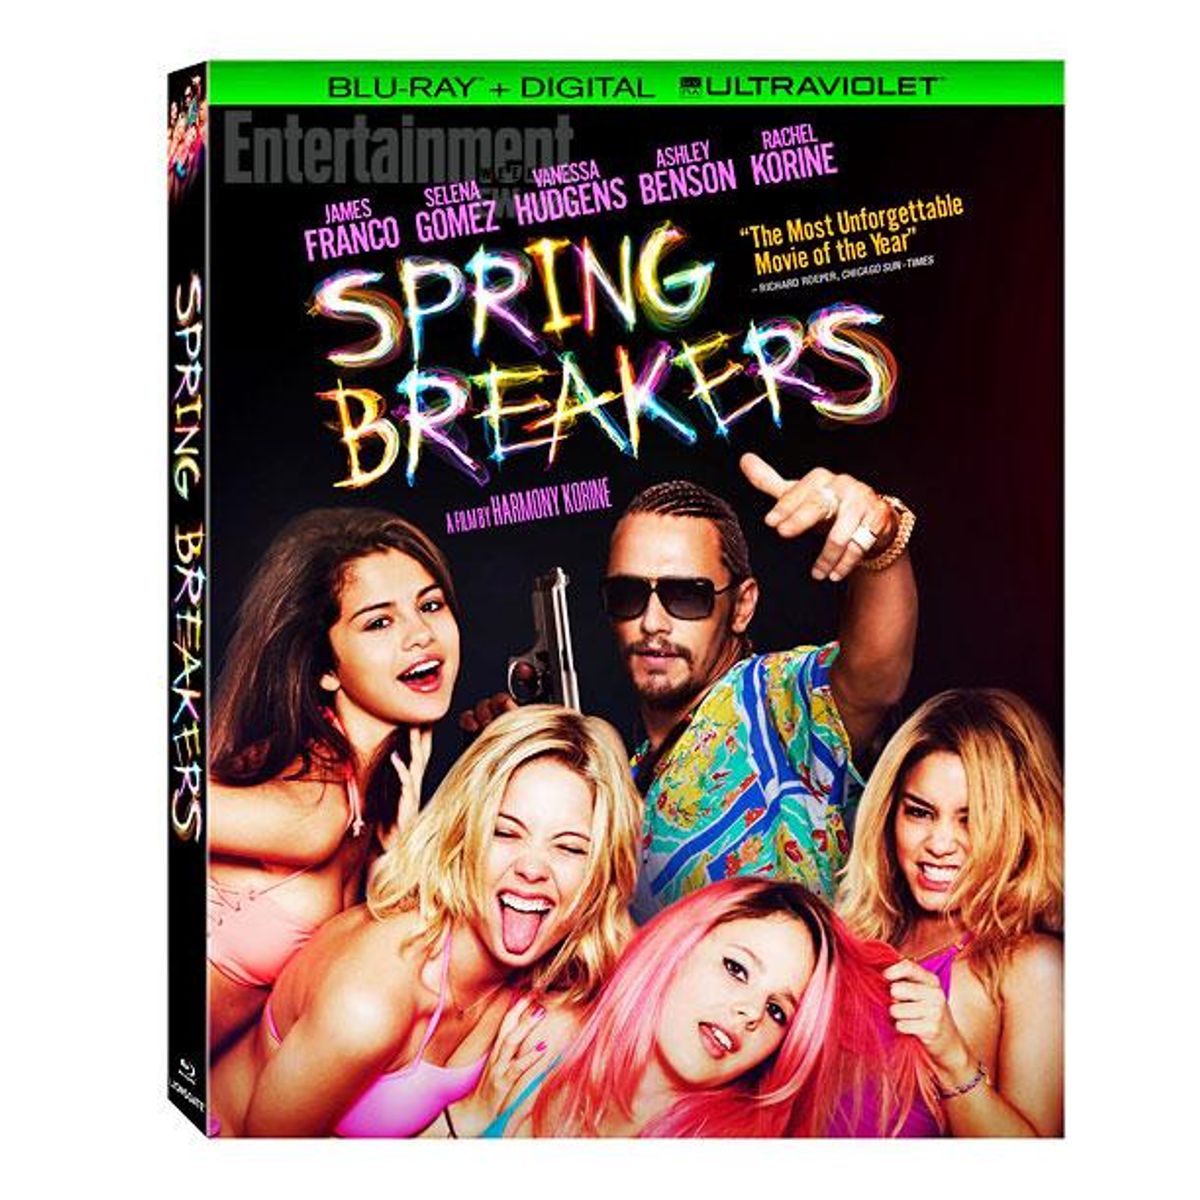 Spring-breakers-cover_0